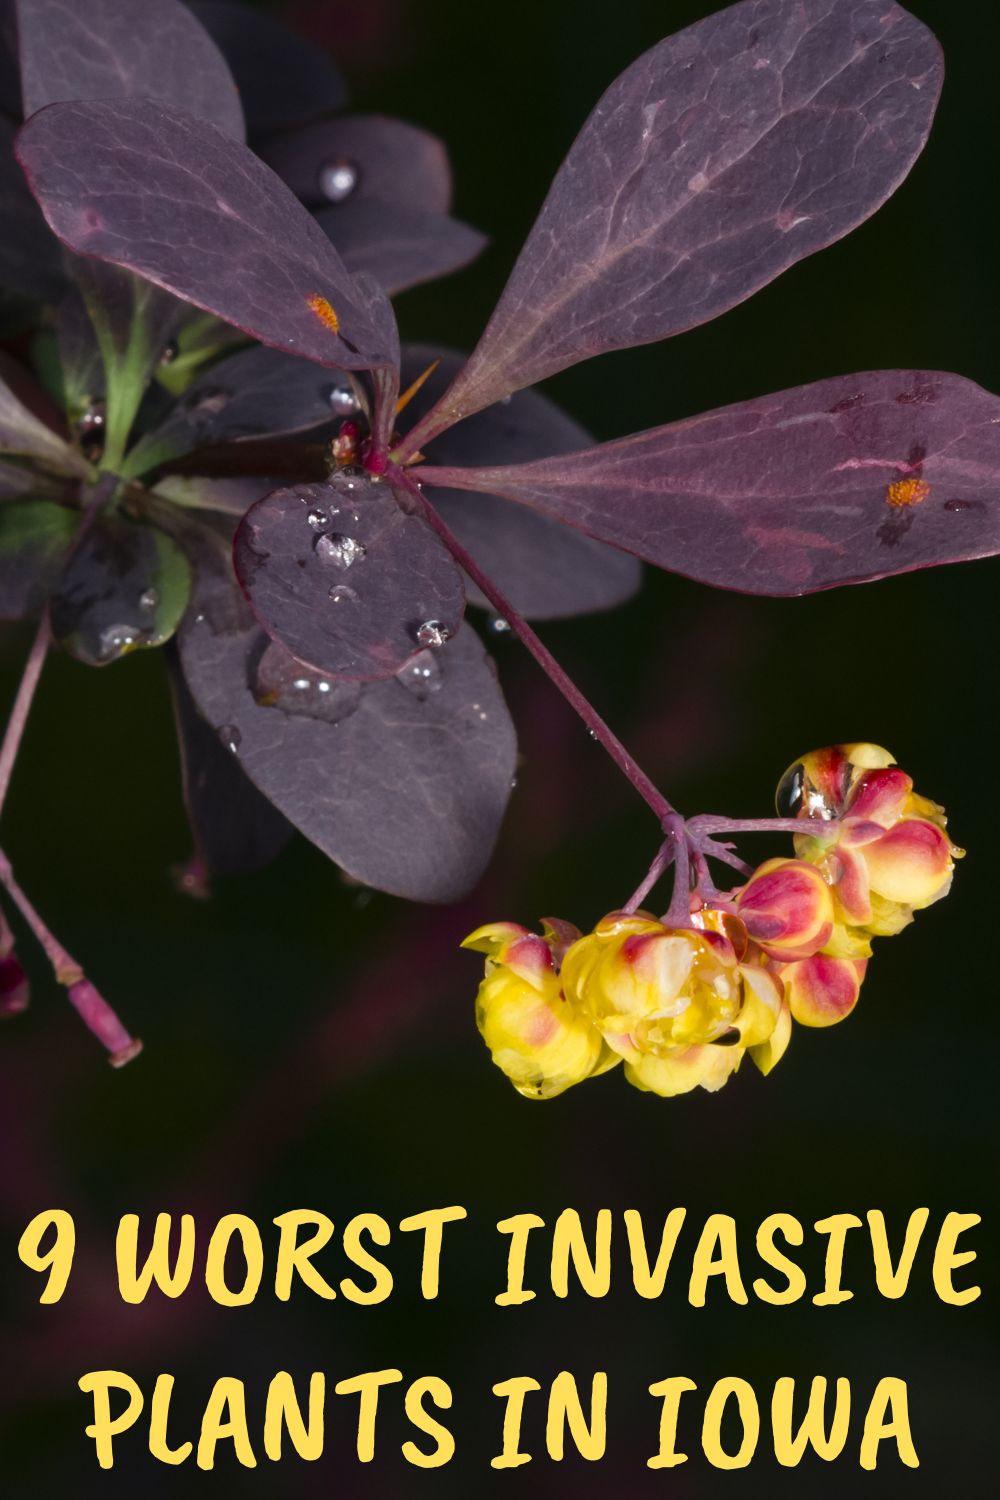 9 Worst Invasive Plants in Iowa